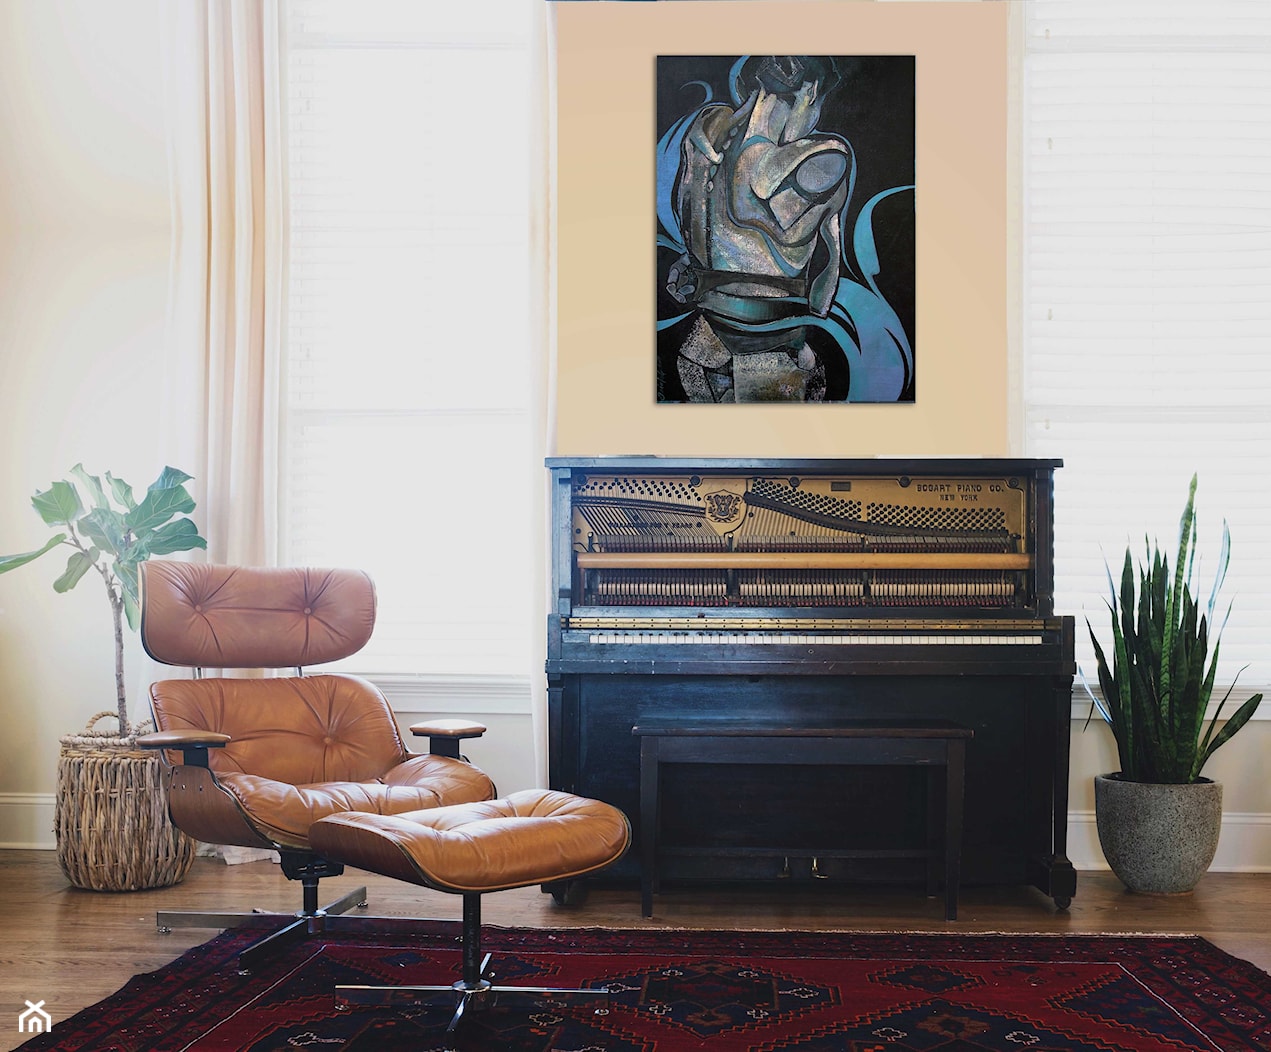 Salon z pianinem i obrazem 'Sensual 4' - zdjęcie od anialuk - Homebook